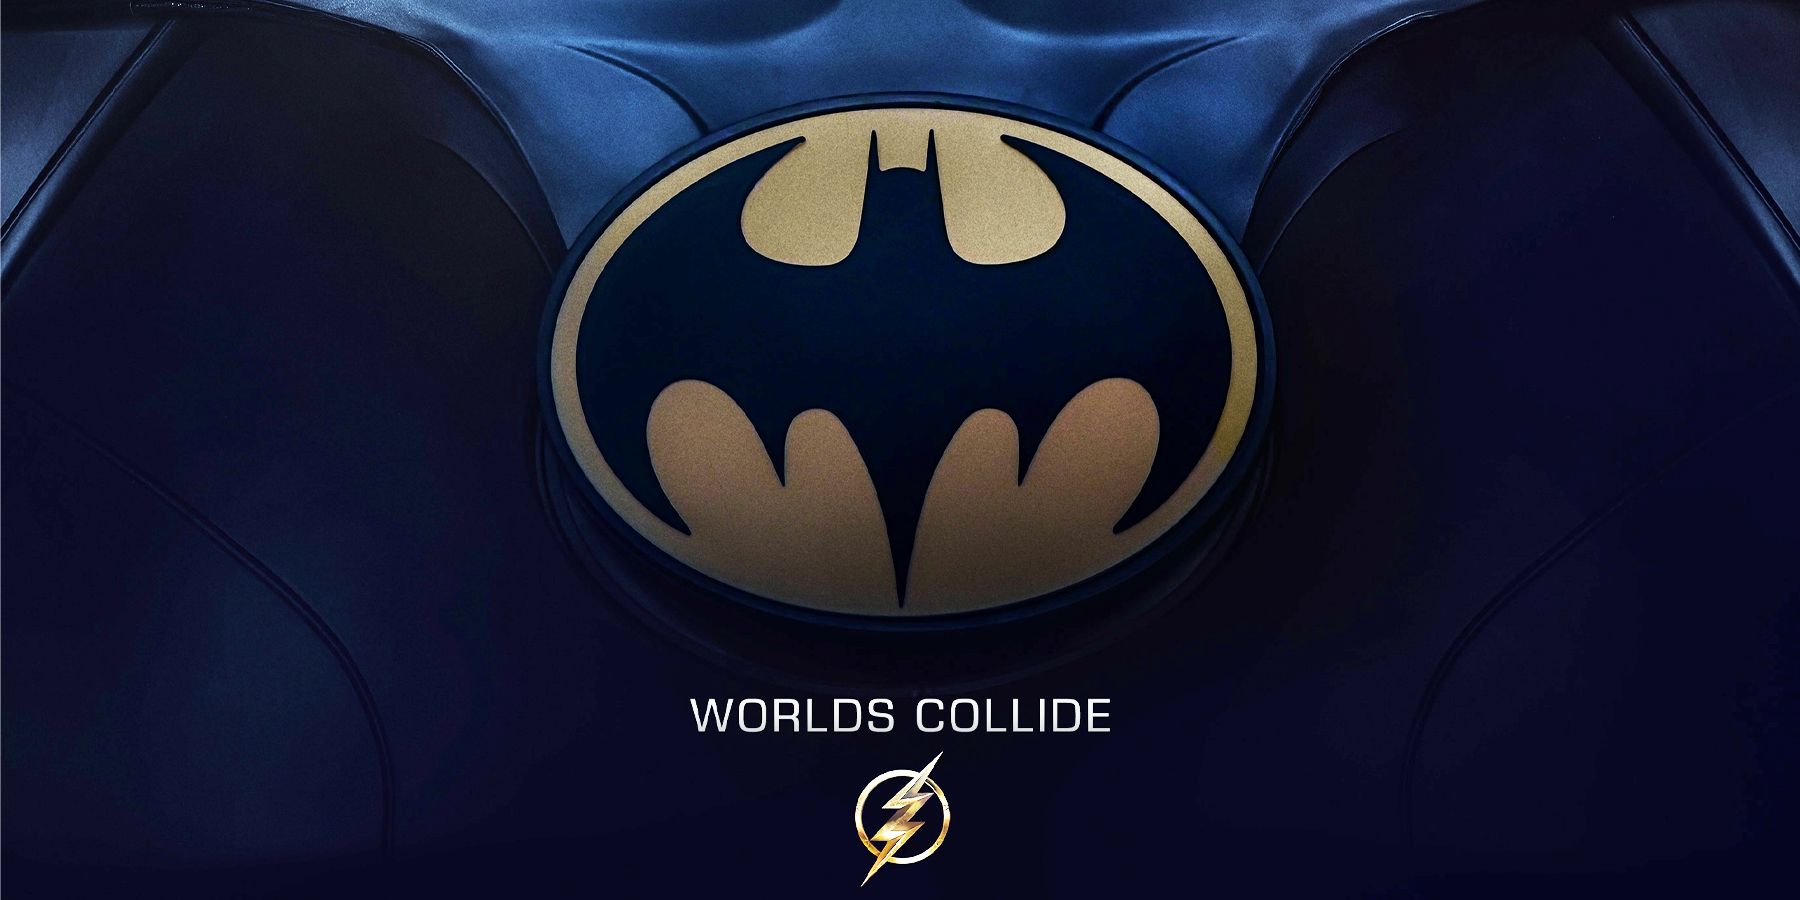 James Gunn Clarifies Batman Casting And The Flash Cameo Rumors